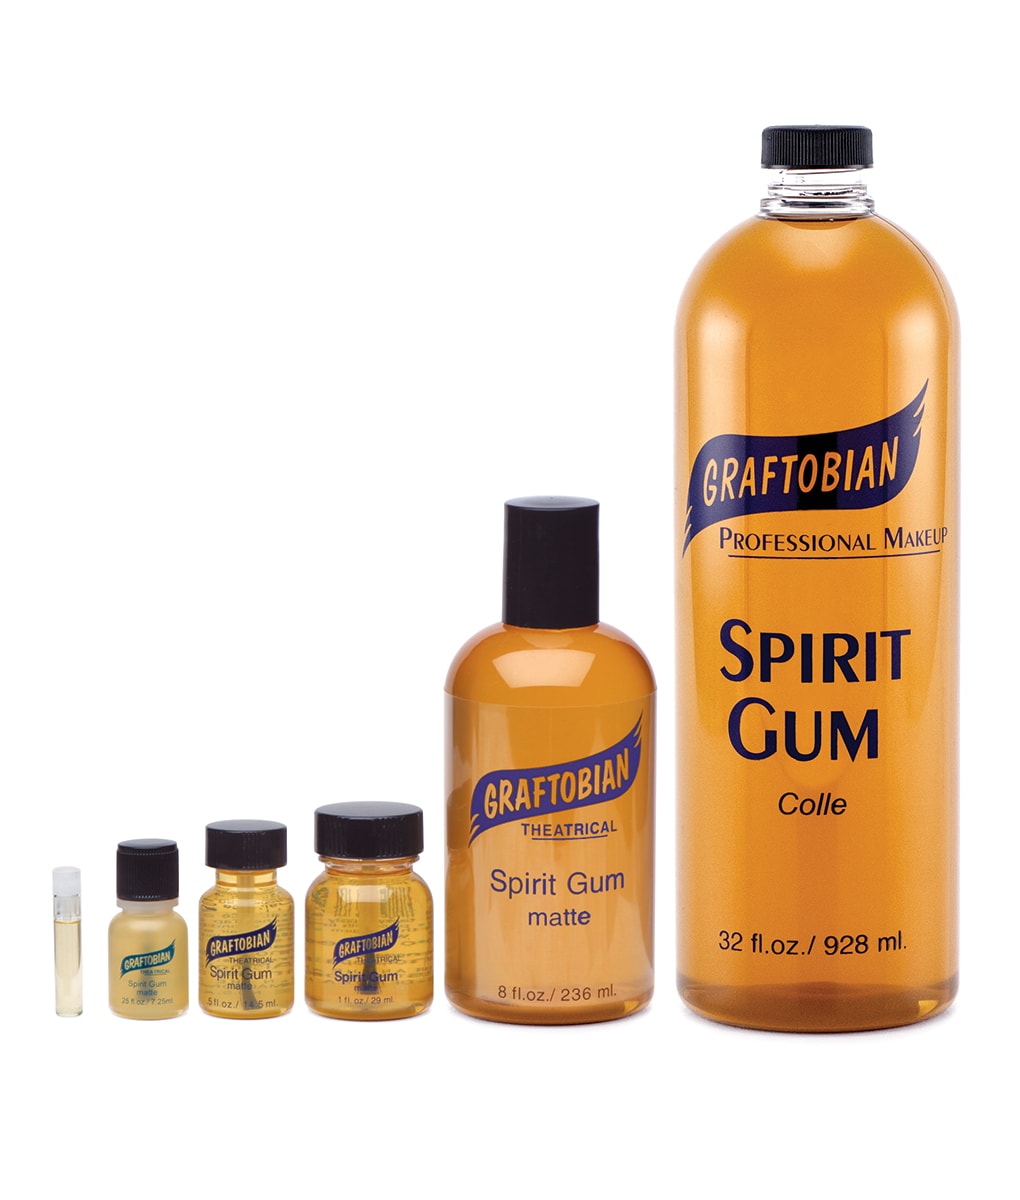 Spirit Gum Tips and Tricks, How to Use Spirit Gum